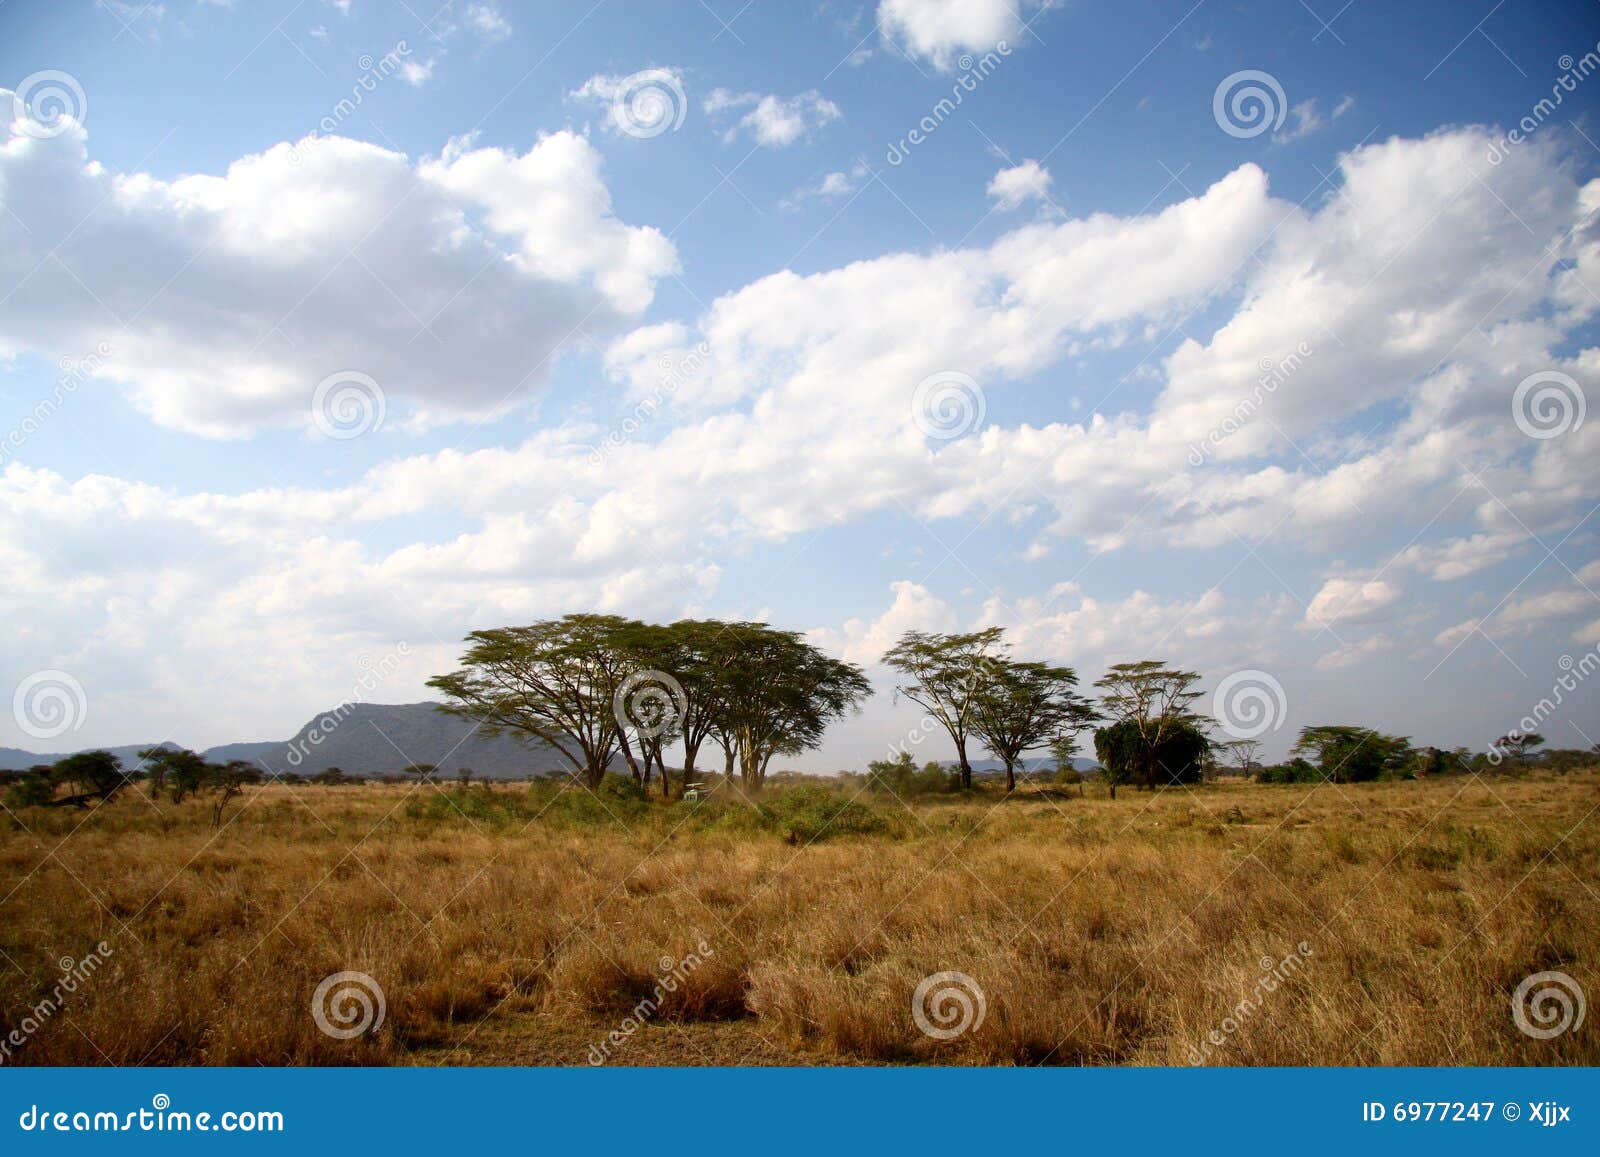 great africa savanna landscape